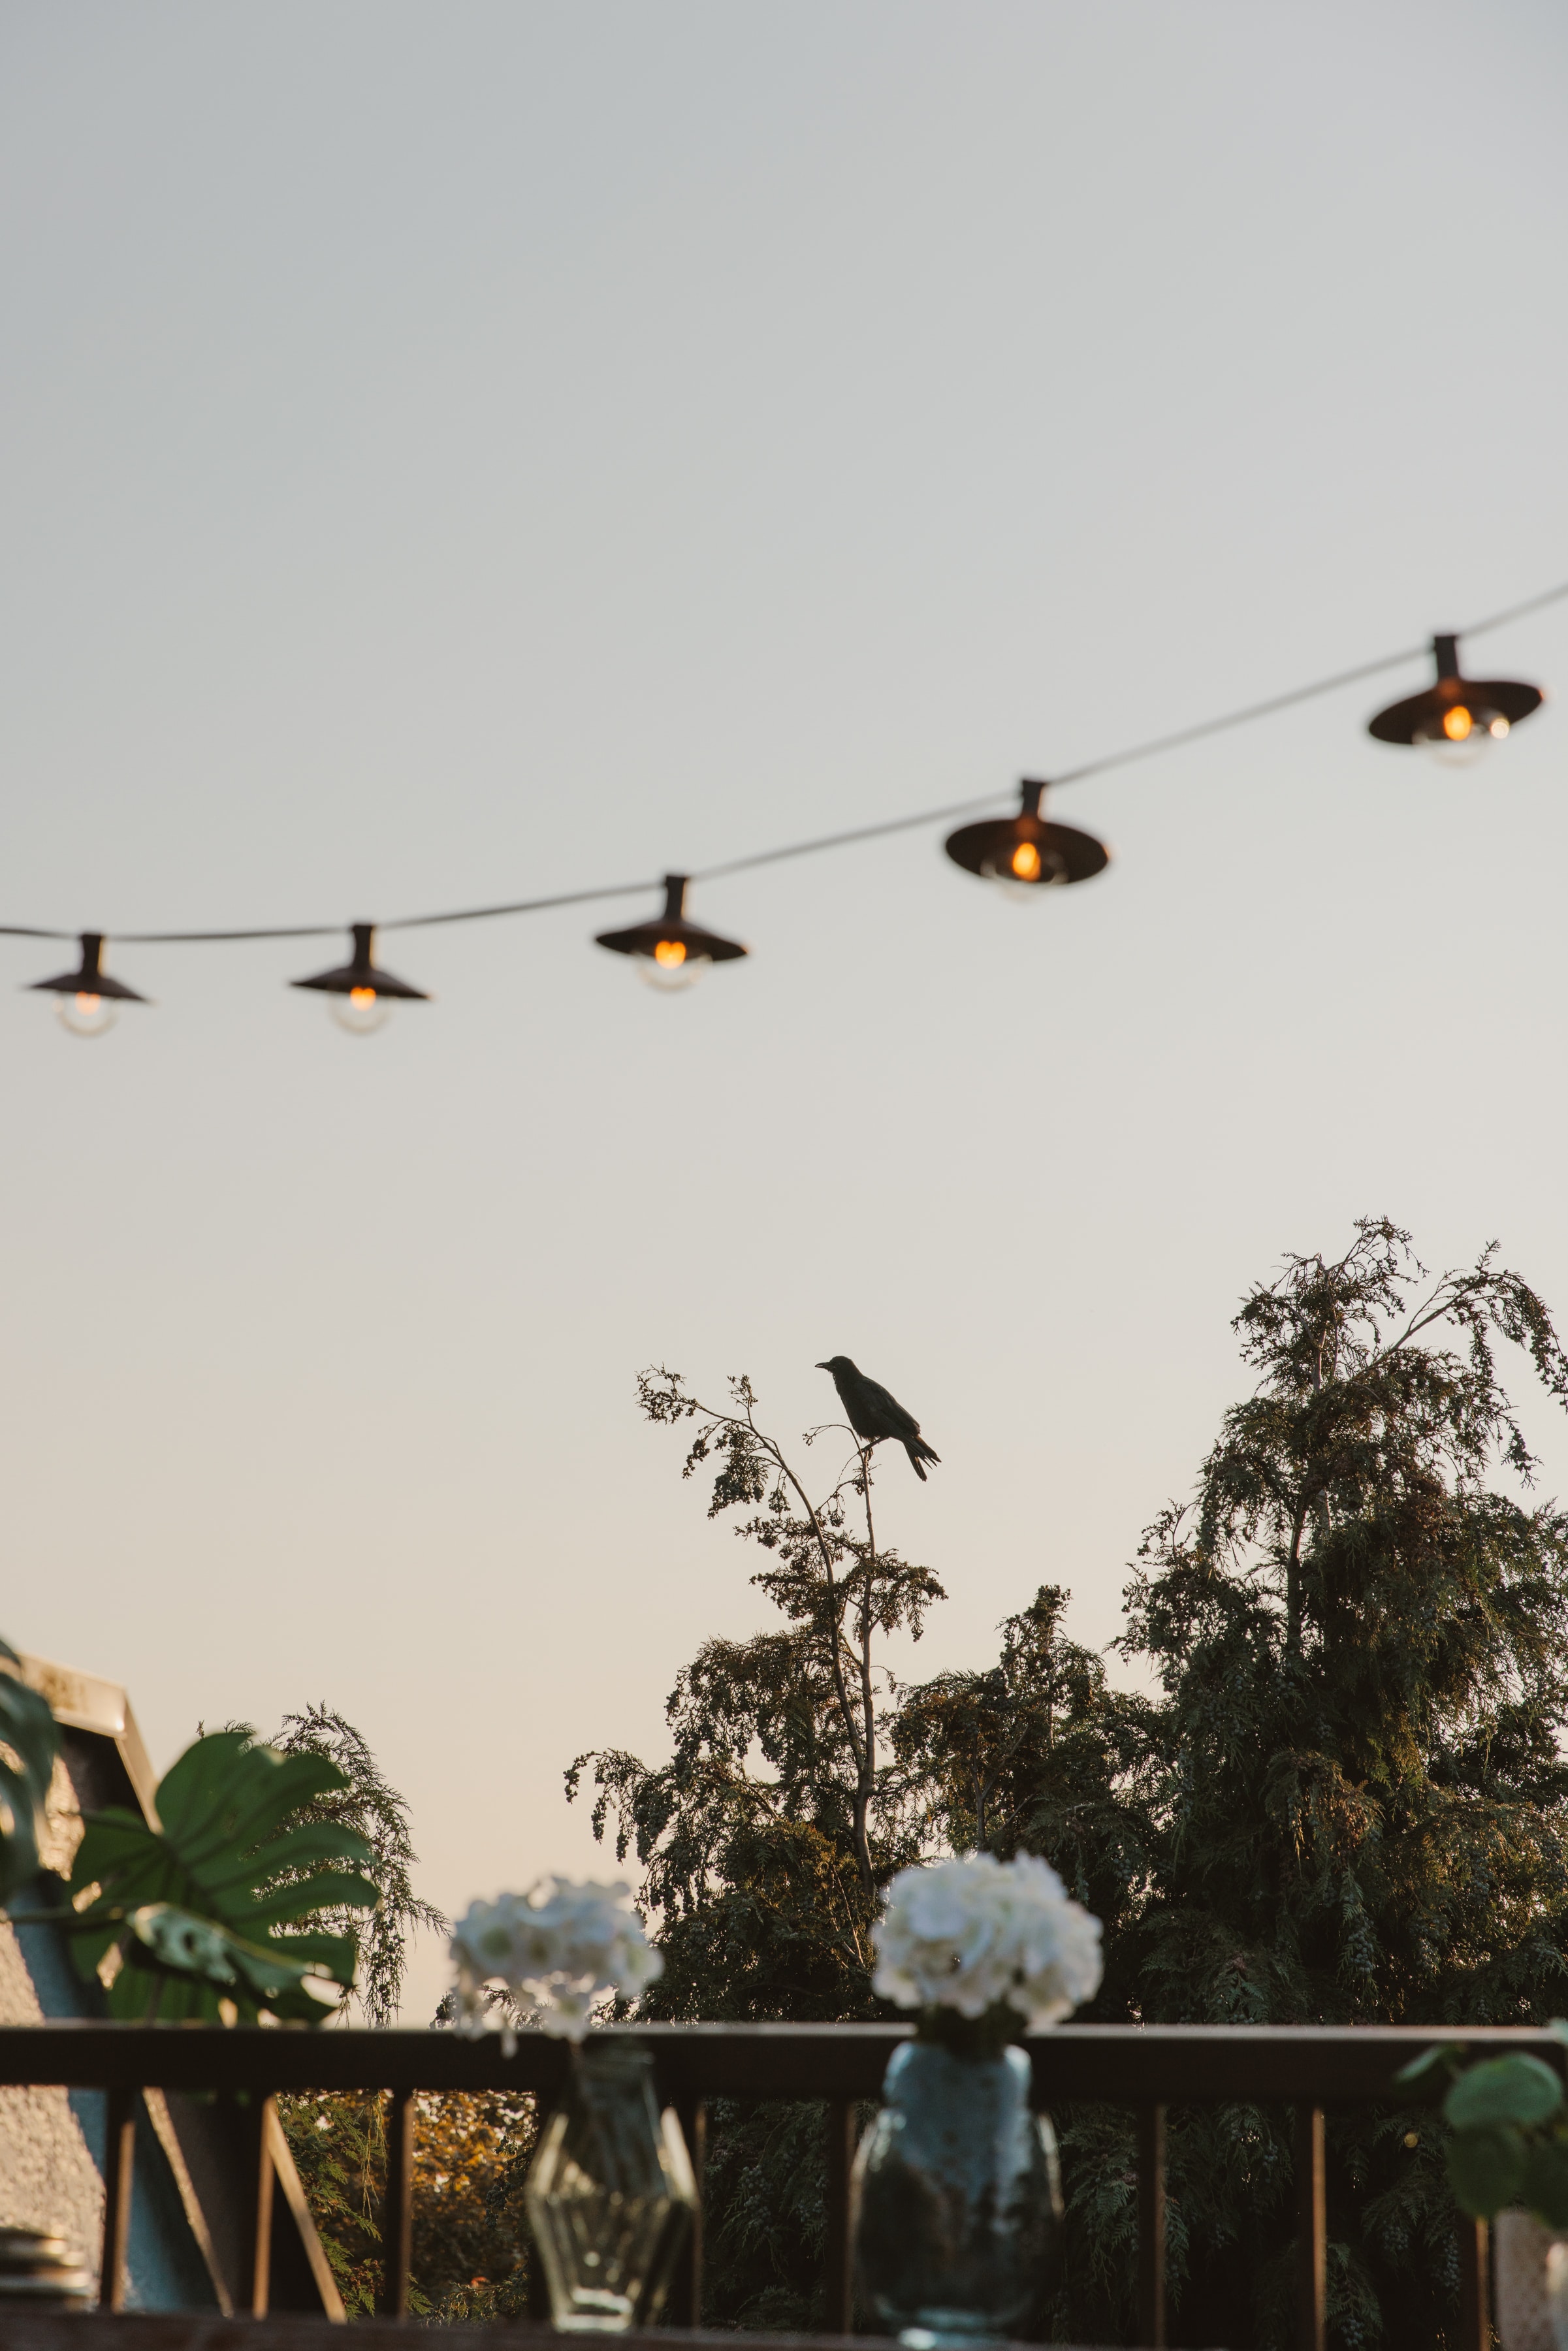 Custom patio lights hang above patio above treeline with crow sitting on branch.